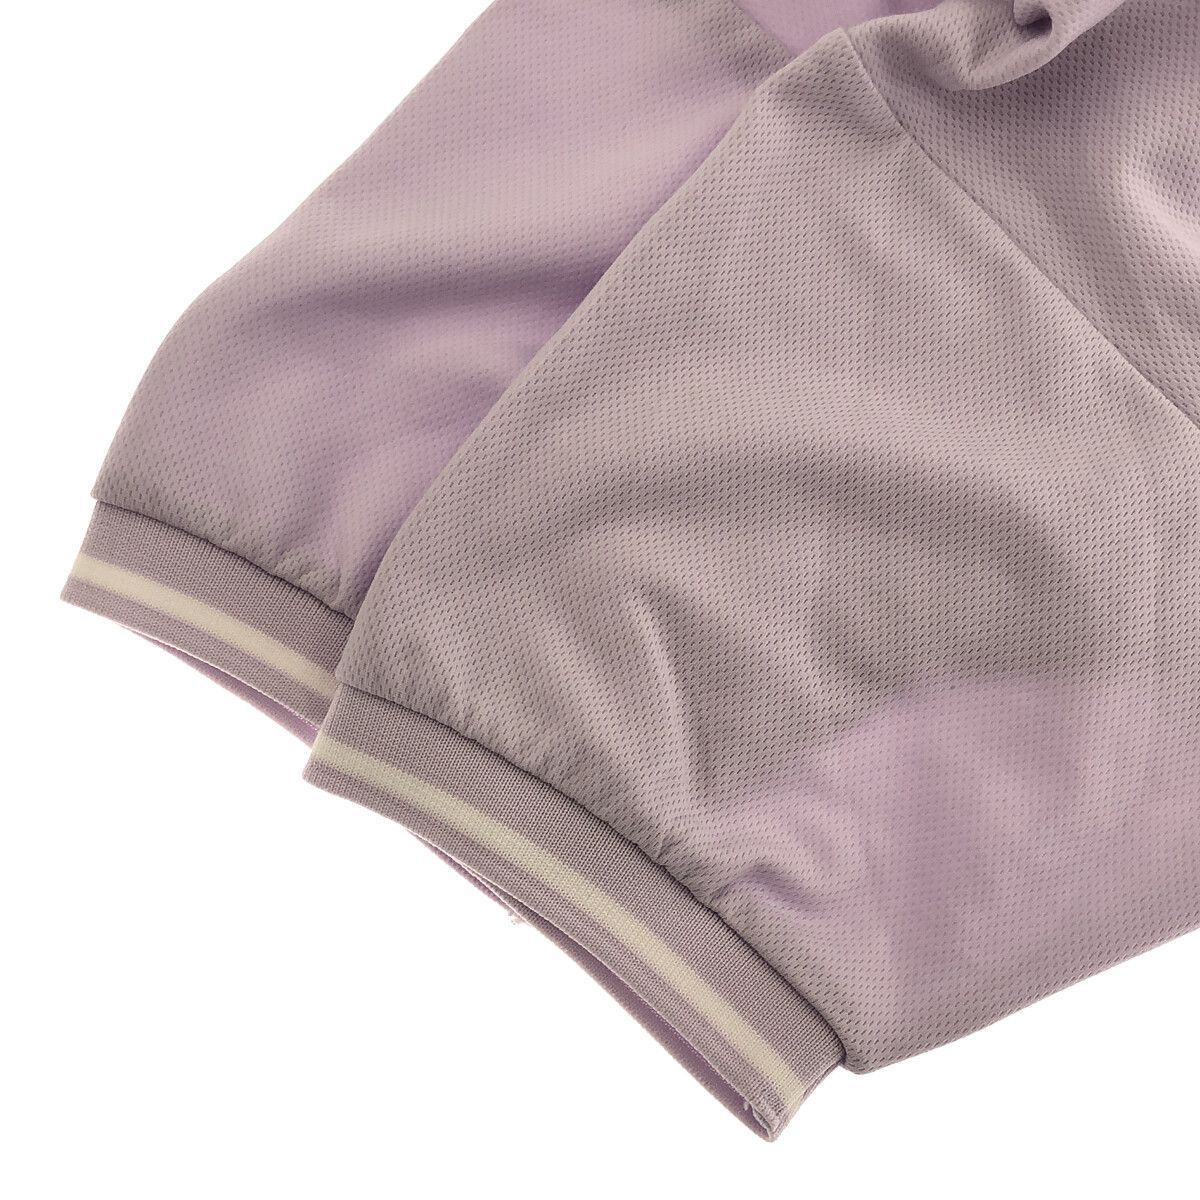 * beautiful goods * KIRAKU tops polo-shirt short sleeves stylish lady's purple M made in Japan 901-1787 free shipping 